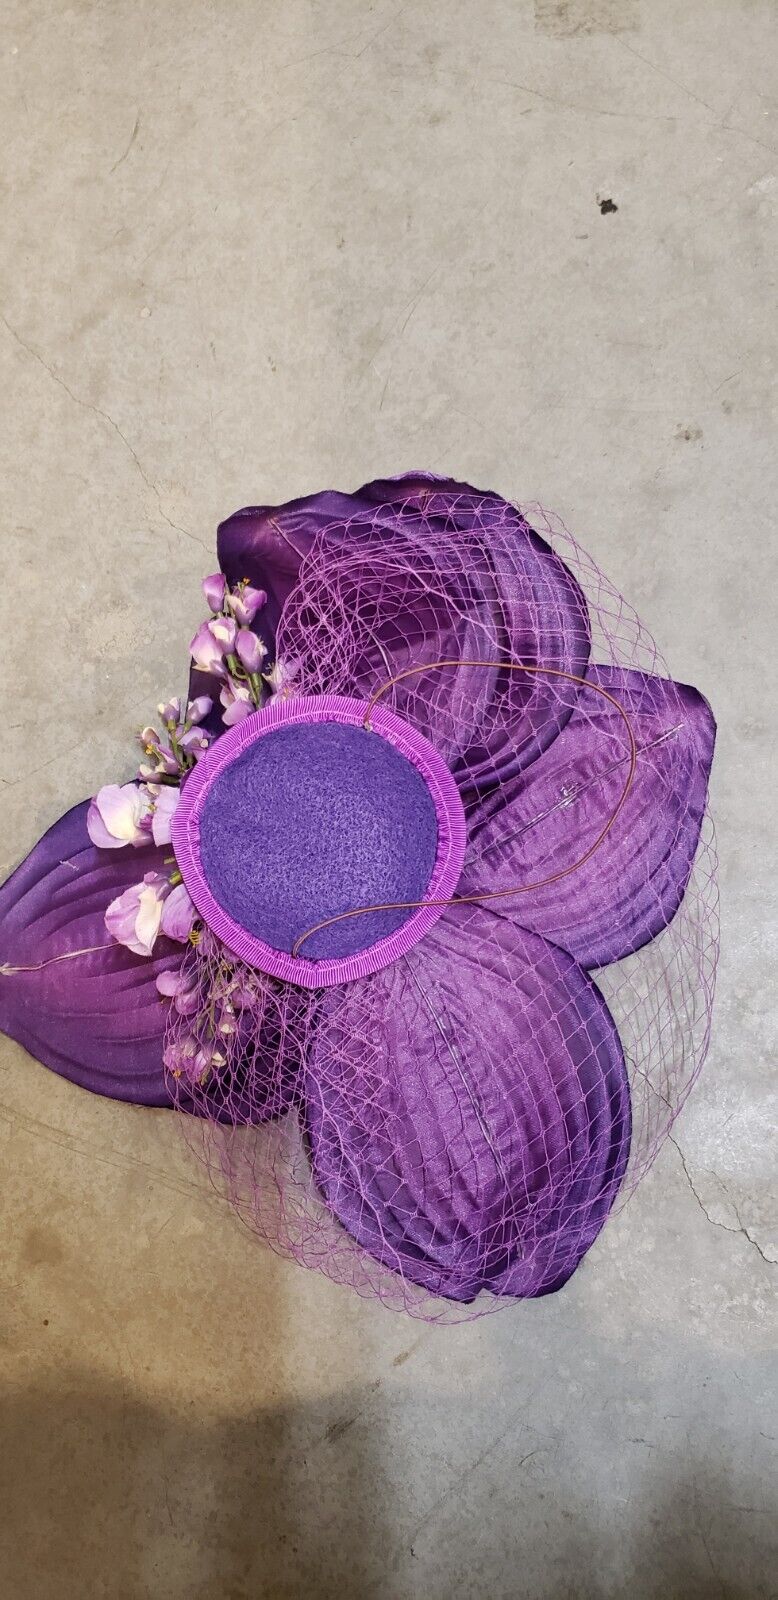 Handmade Floral Fascinator Purple Pink Large Flower Headpiece Artisinal Milliner